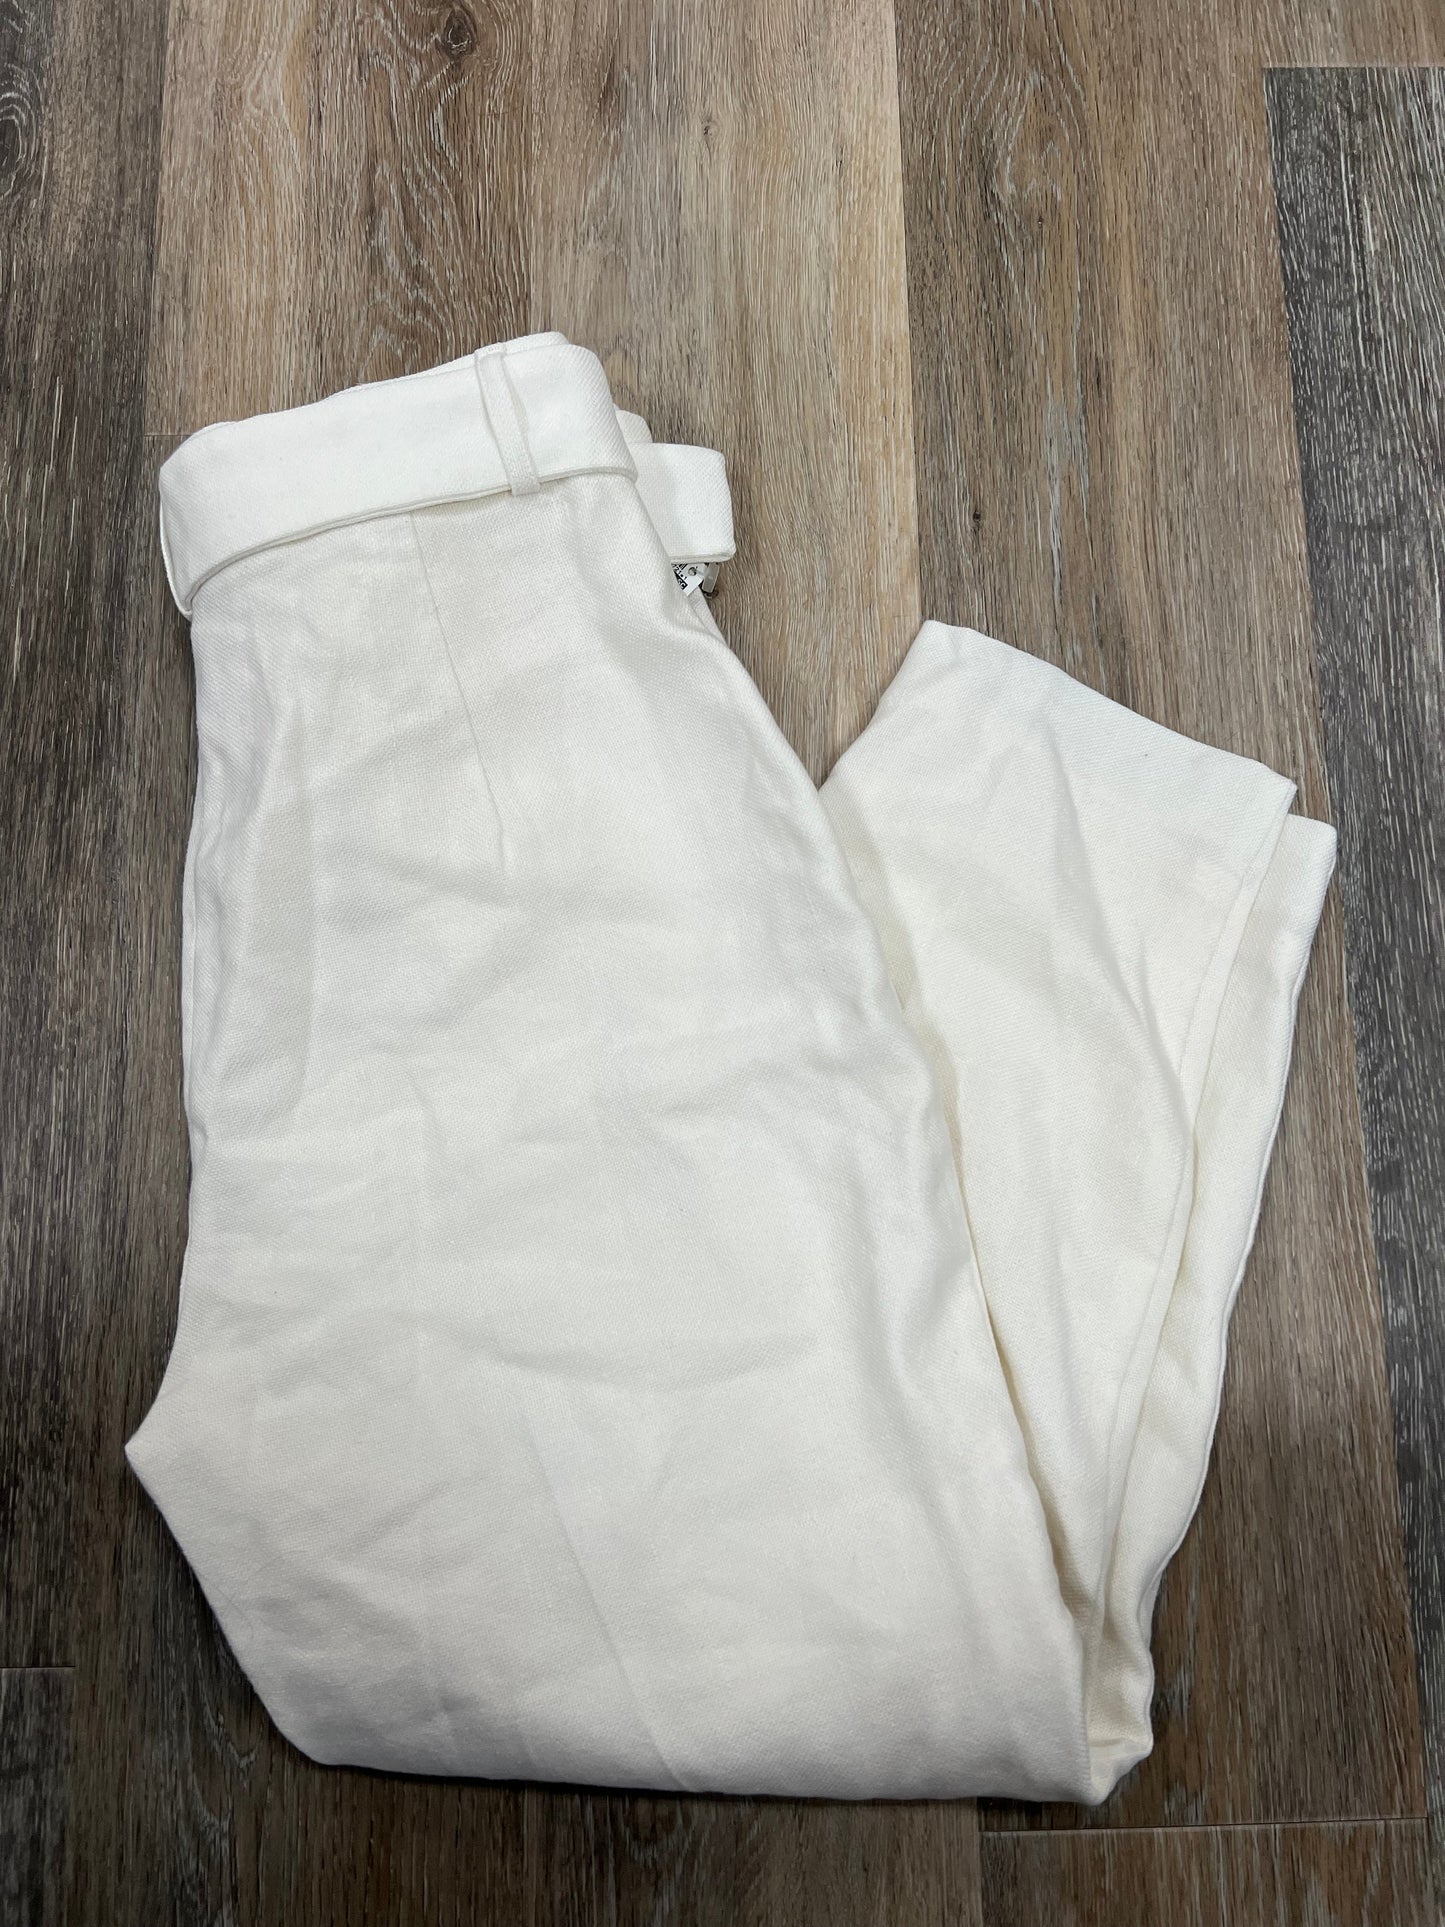 Pants Work/dress By Express  Size: 4 Petite